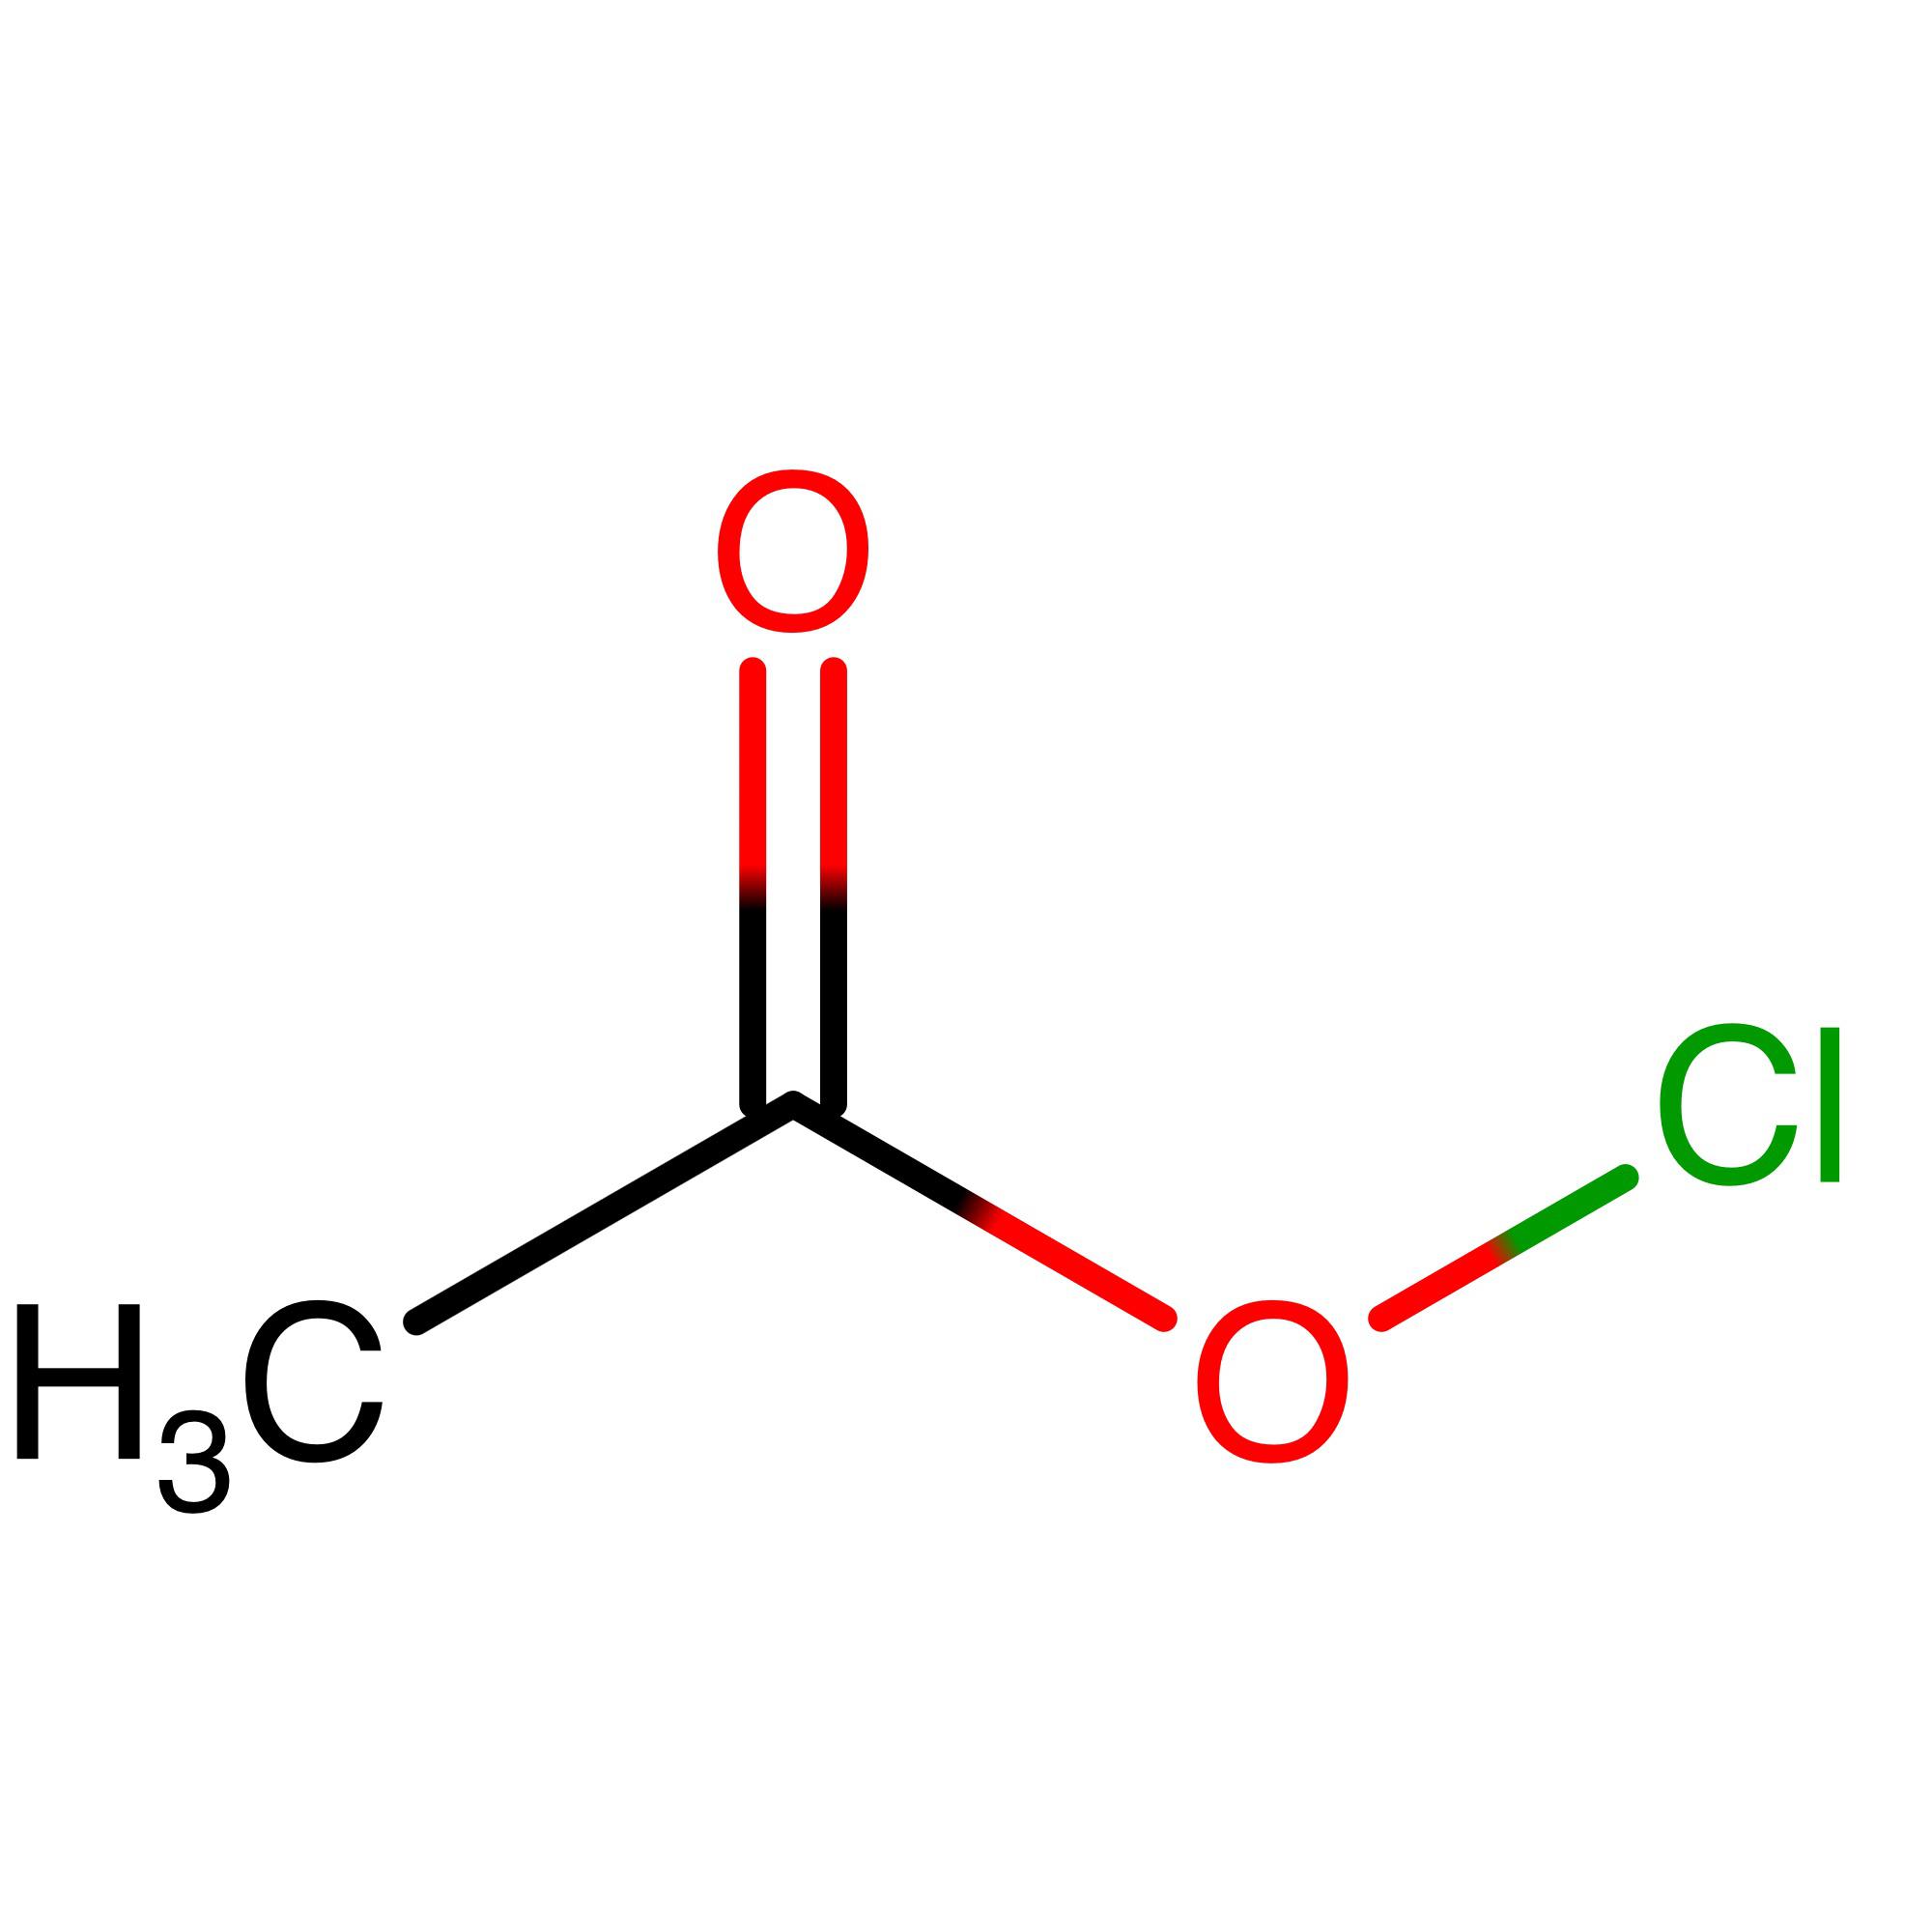 Detail Acetylchlorid Ethanol Nomer 7